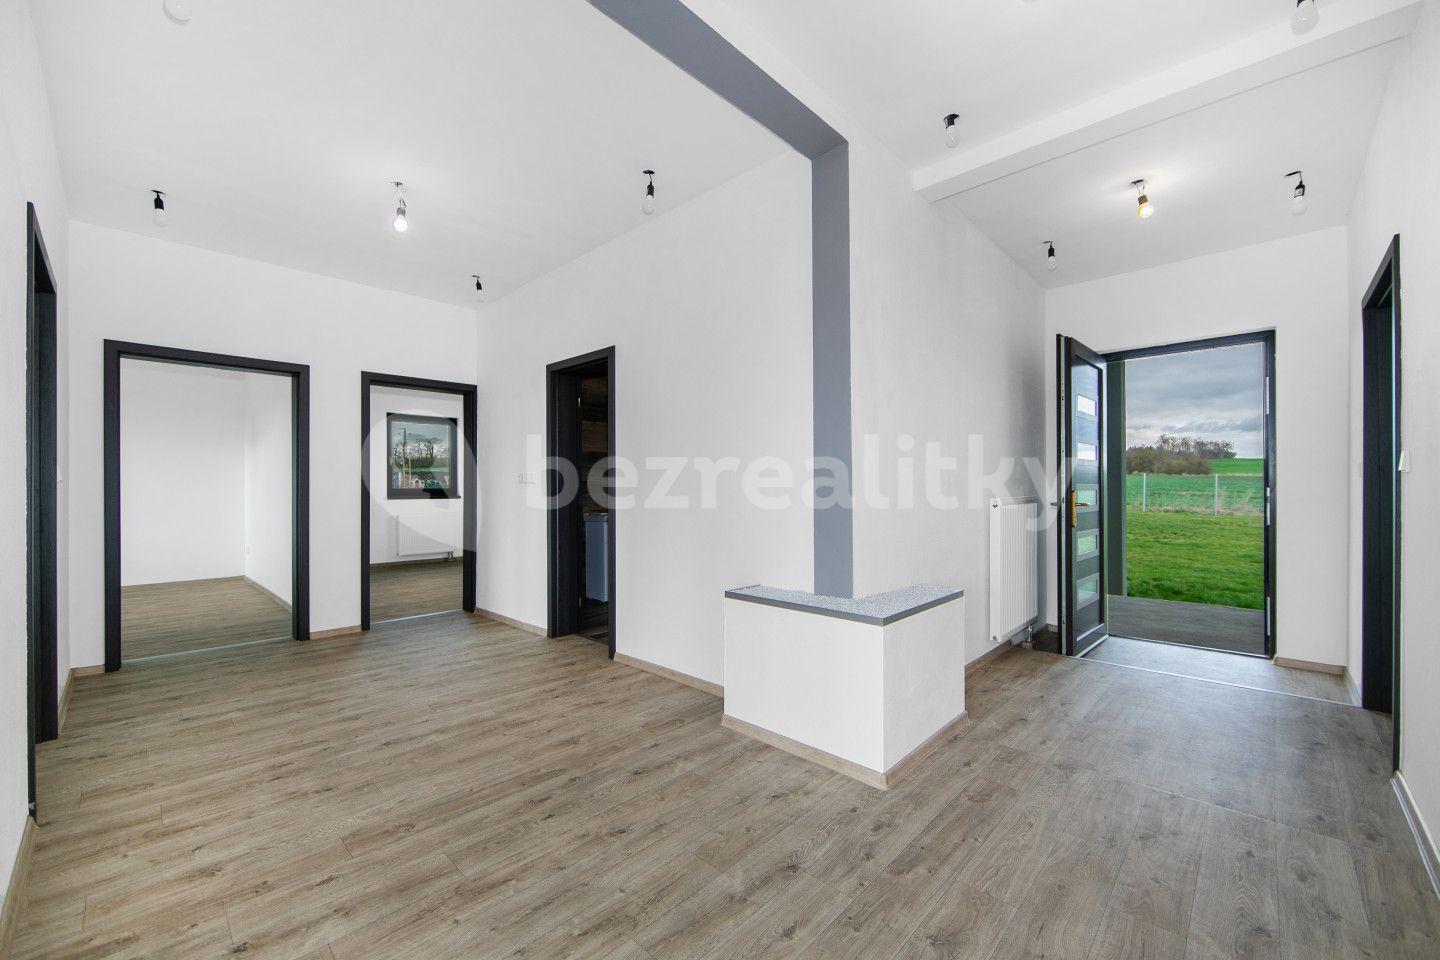 Prodej domu 154 m², pozemek 1.600 m², Lochousice, Plzeňský kraj